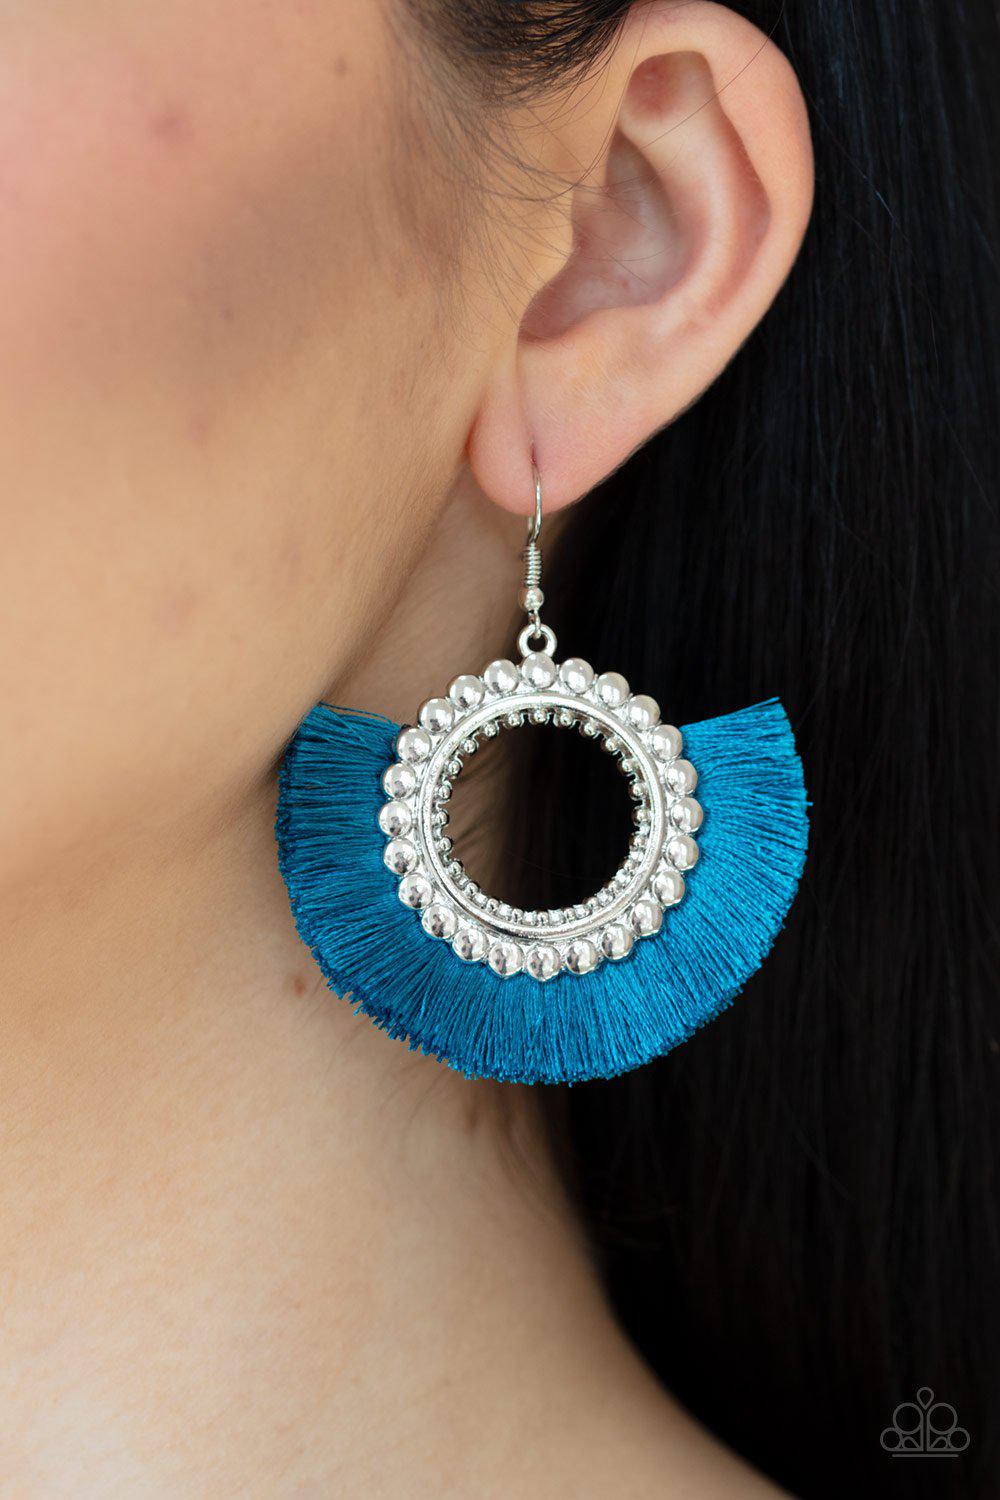 Fringe Fanatic Mosaic Blue Fringe Earrings - Paparazzi Accessories-CarasShop.com - $5 Jewelry by Cara Jewels